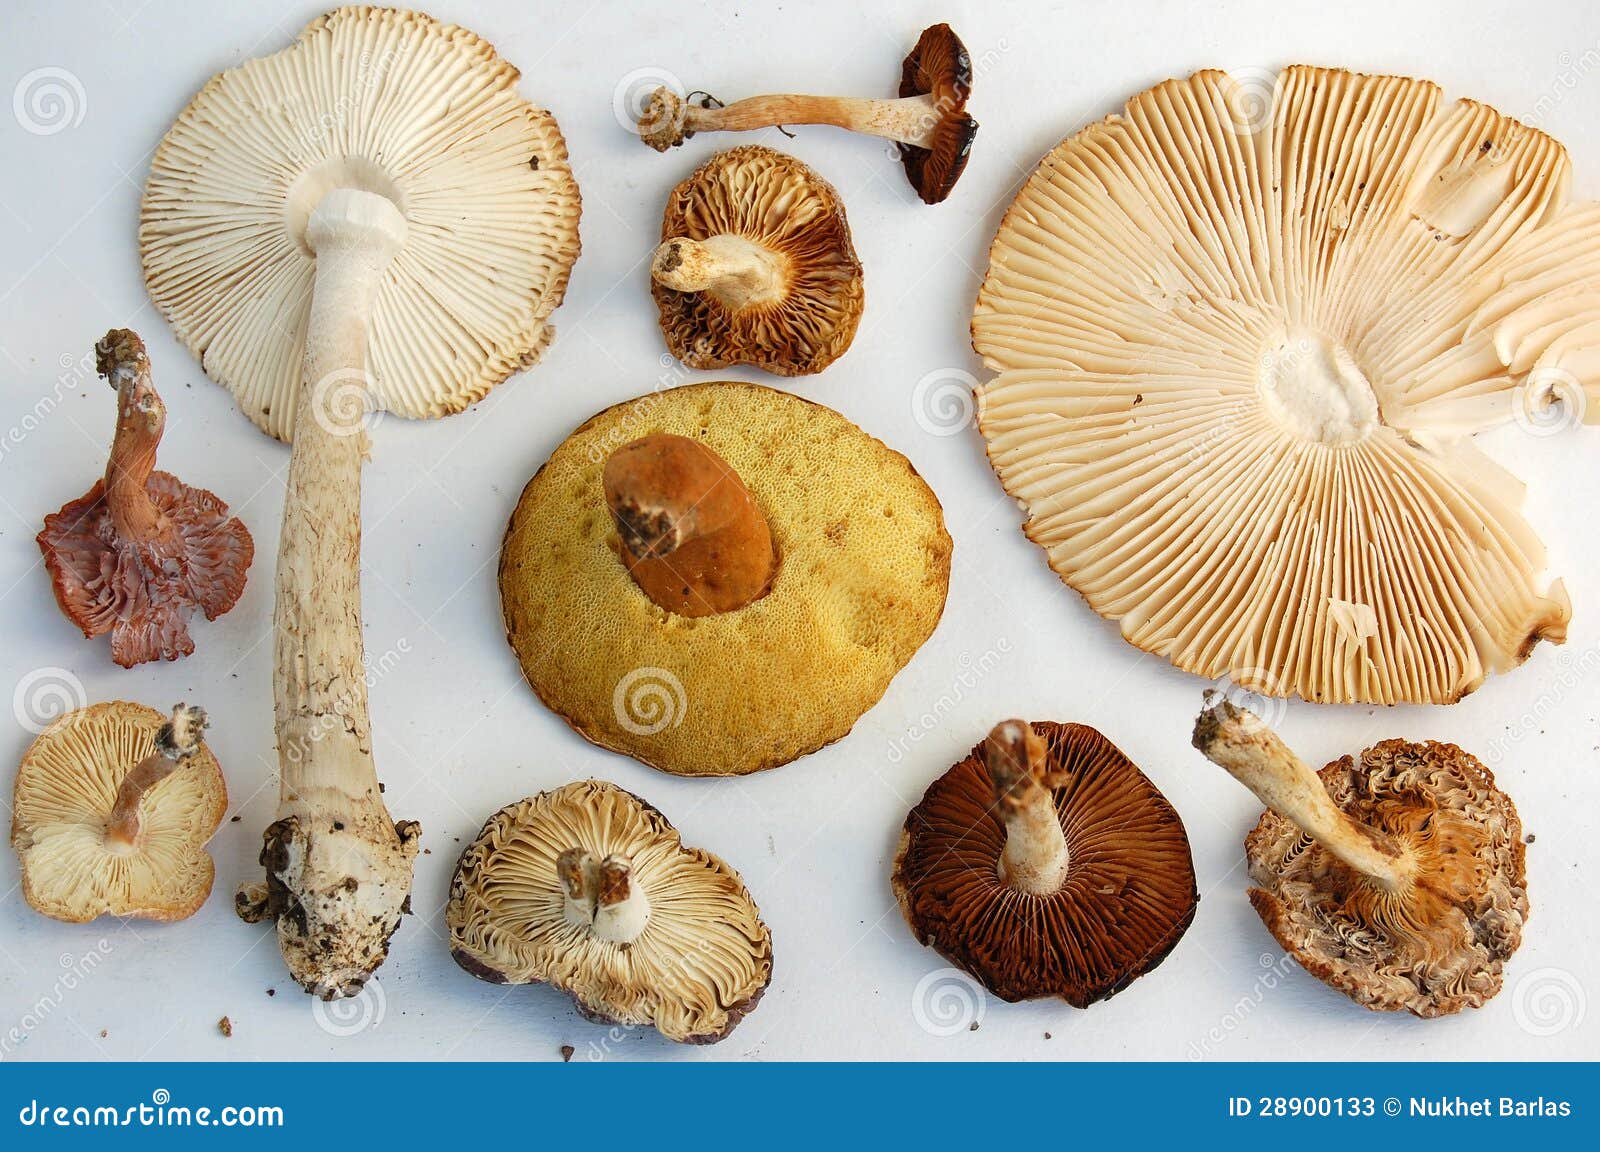 gills of wild mushrooms